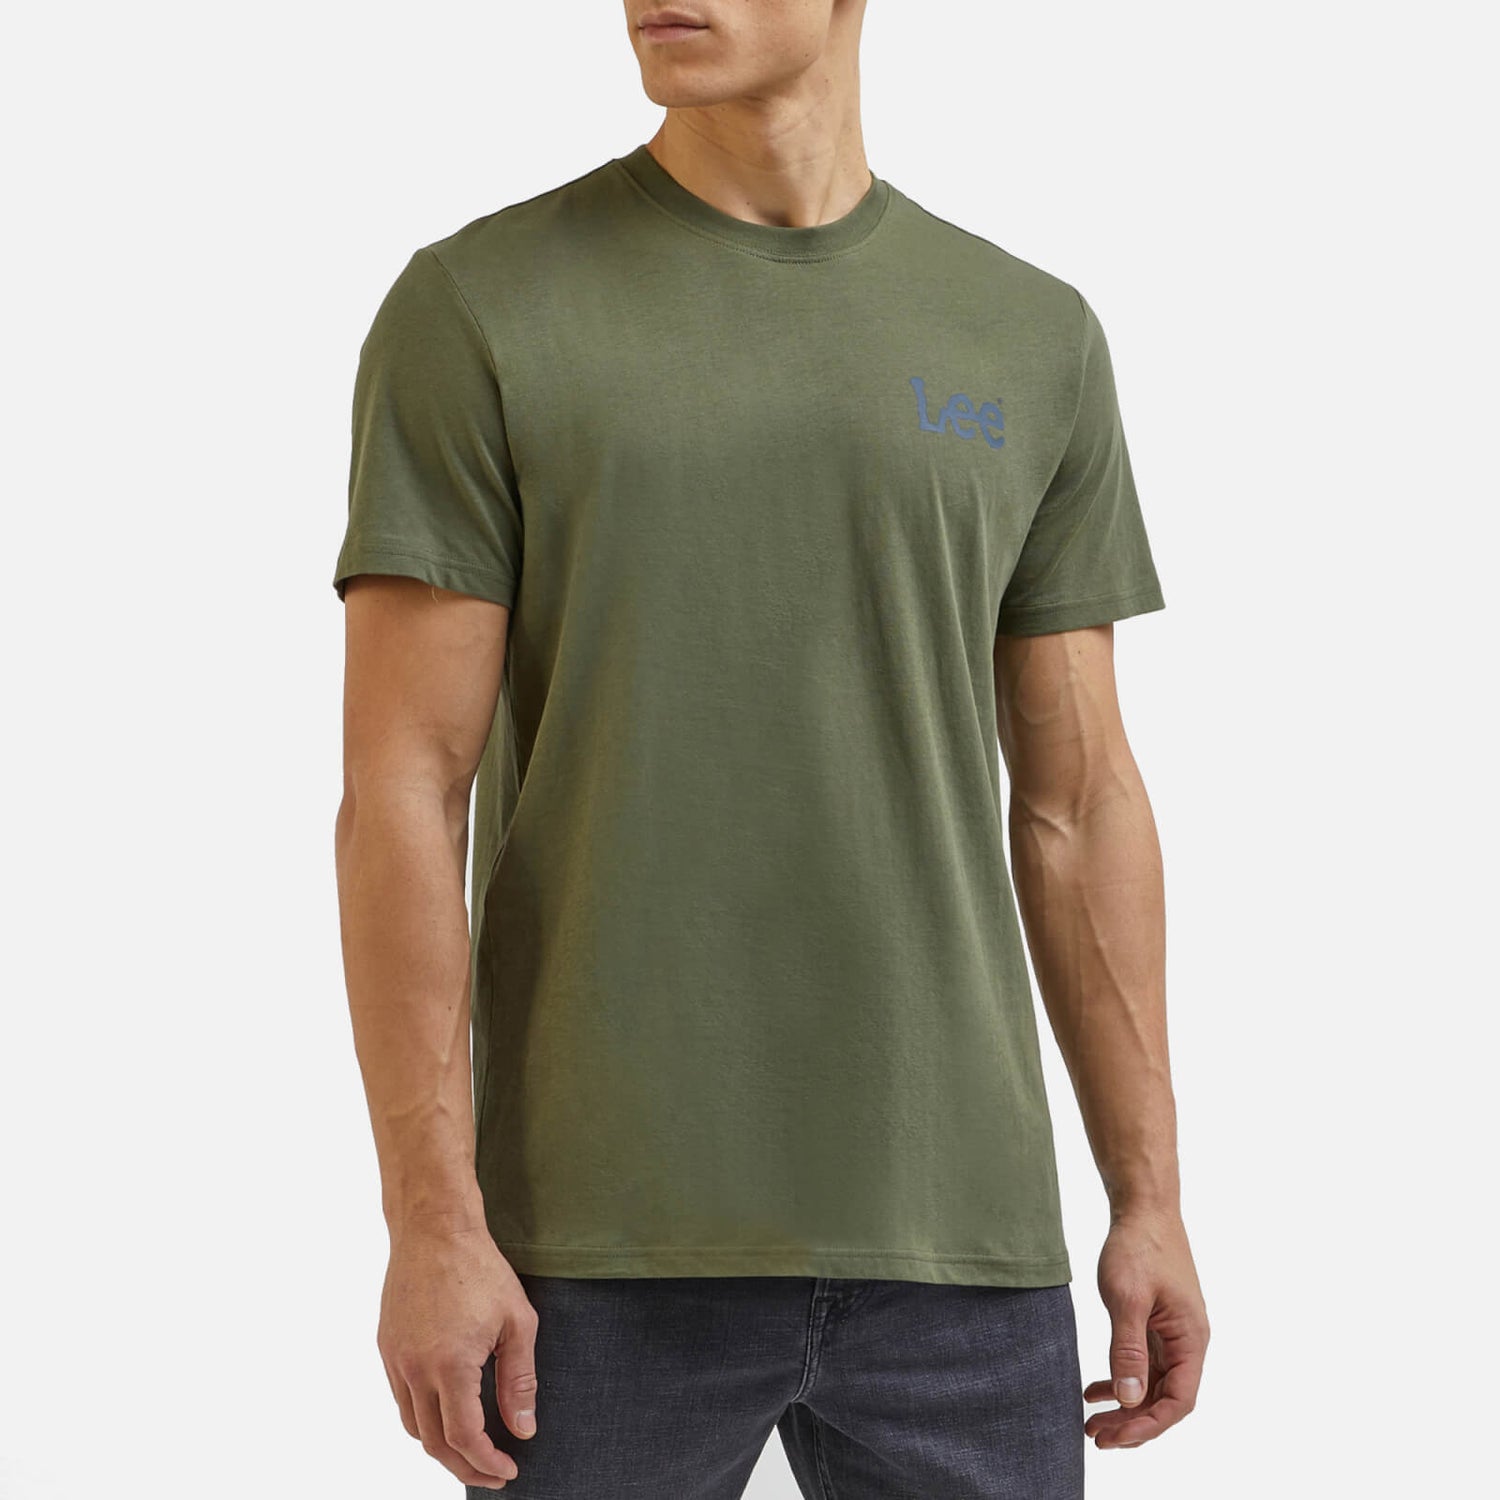 Lee Medium Wobbly Lee Cotton-Jersey T-Shirt - S